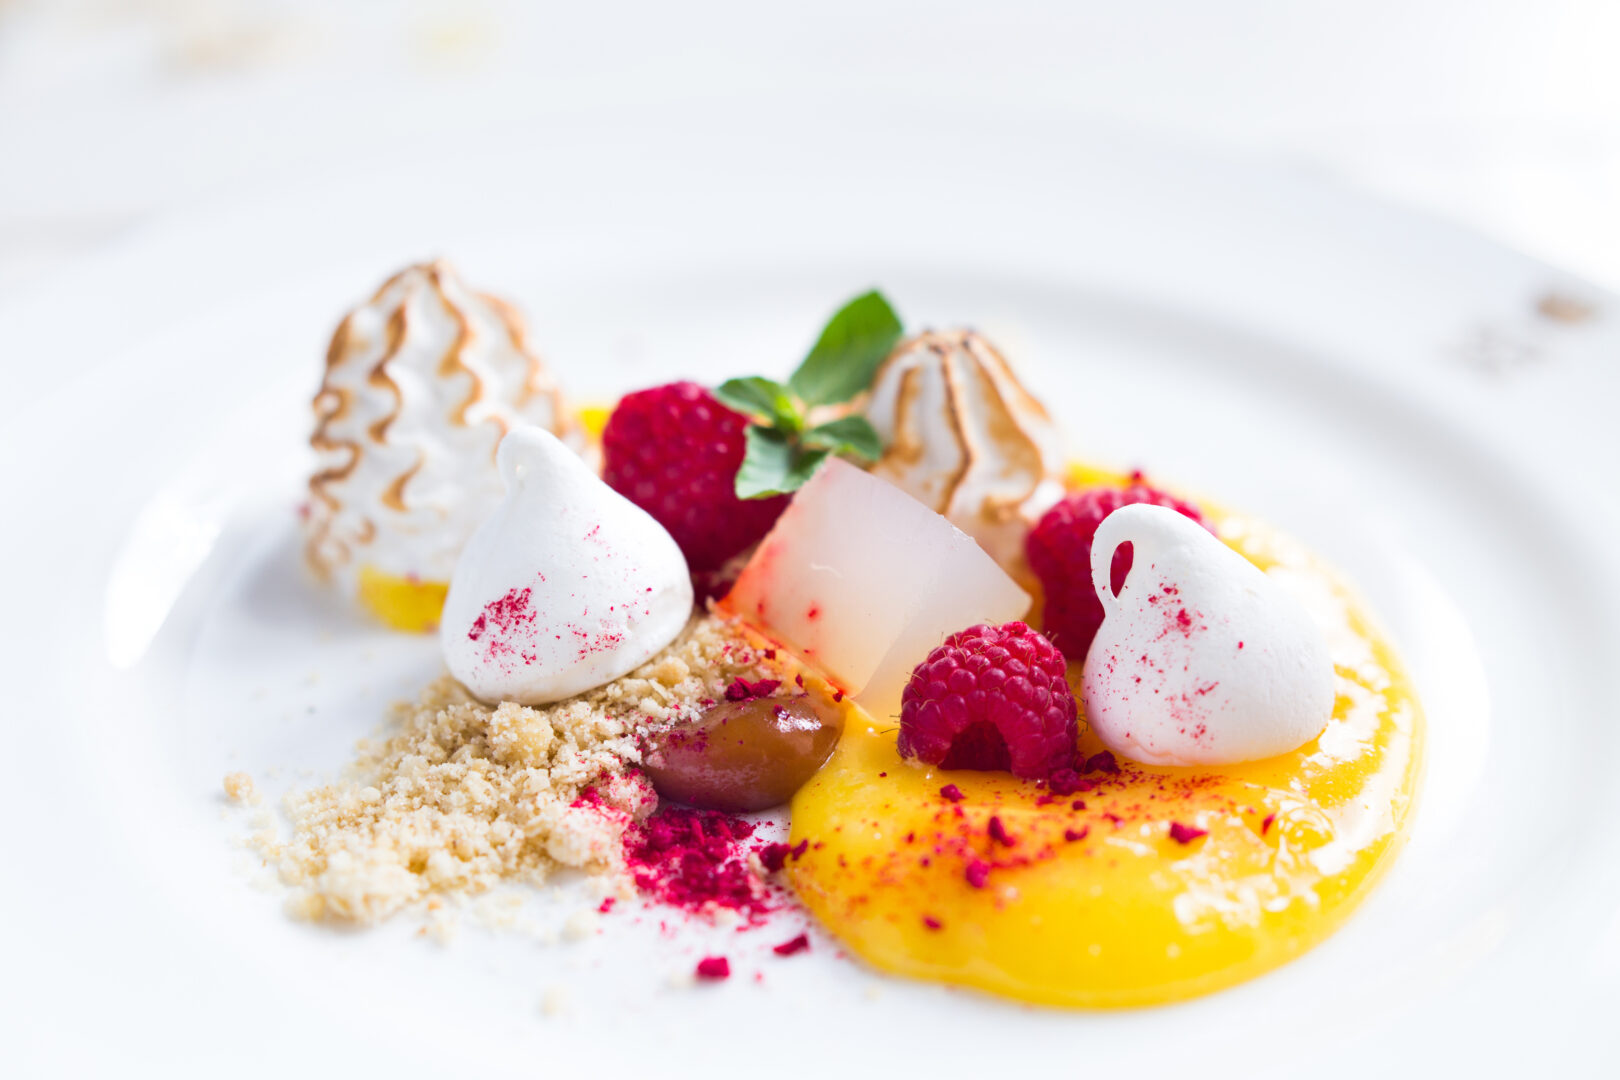 A dessert plate filled with fresh raspberries, meringue and lemons